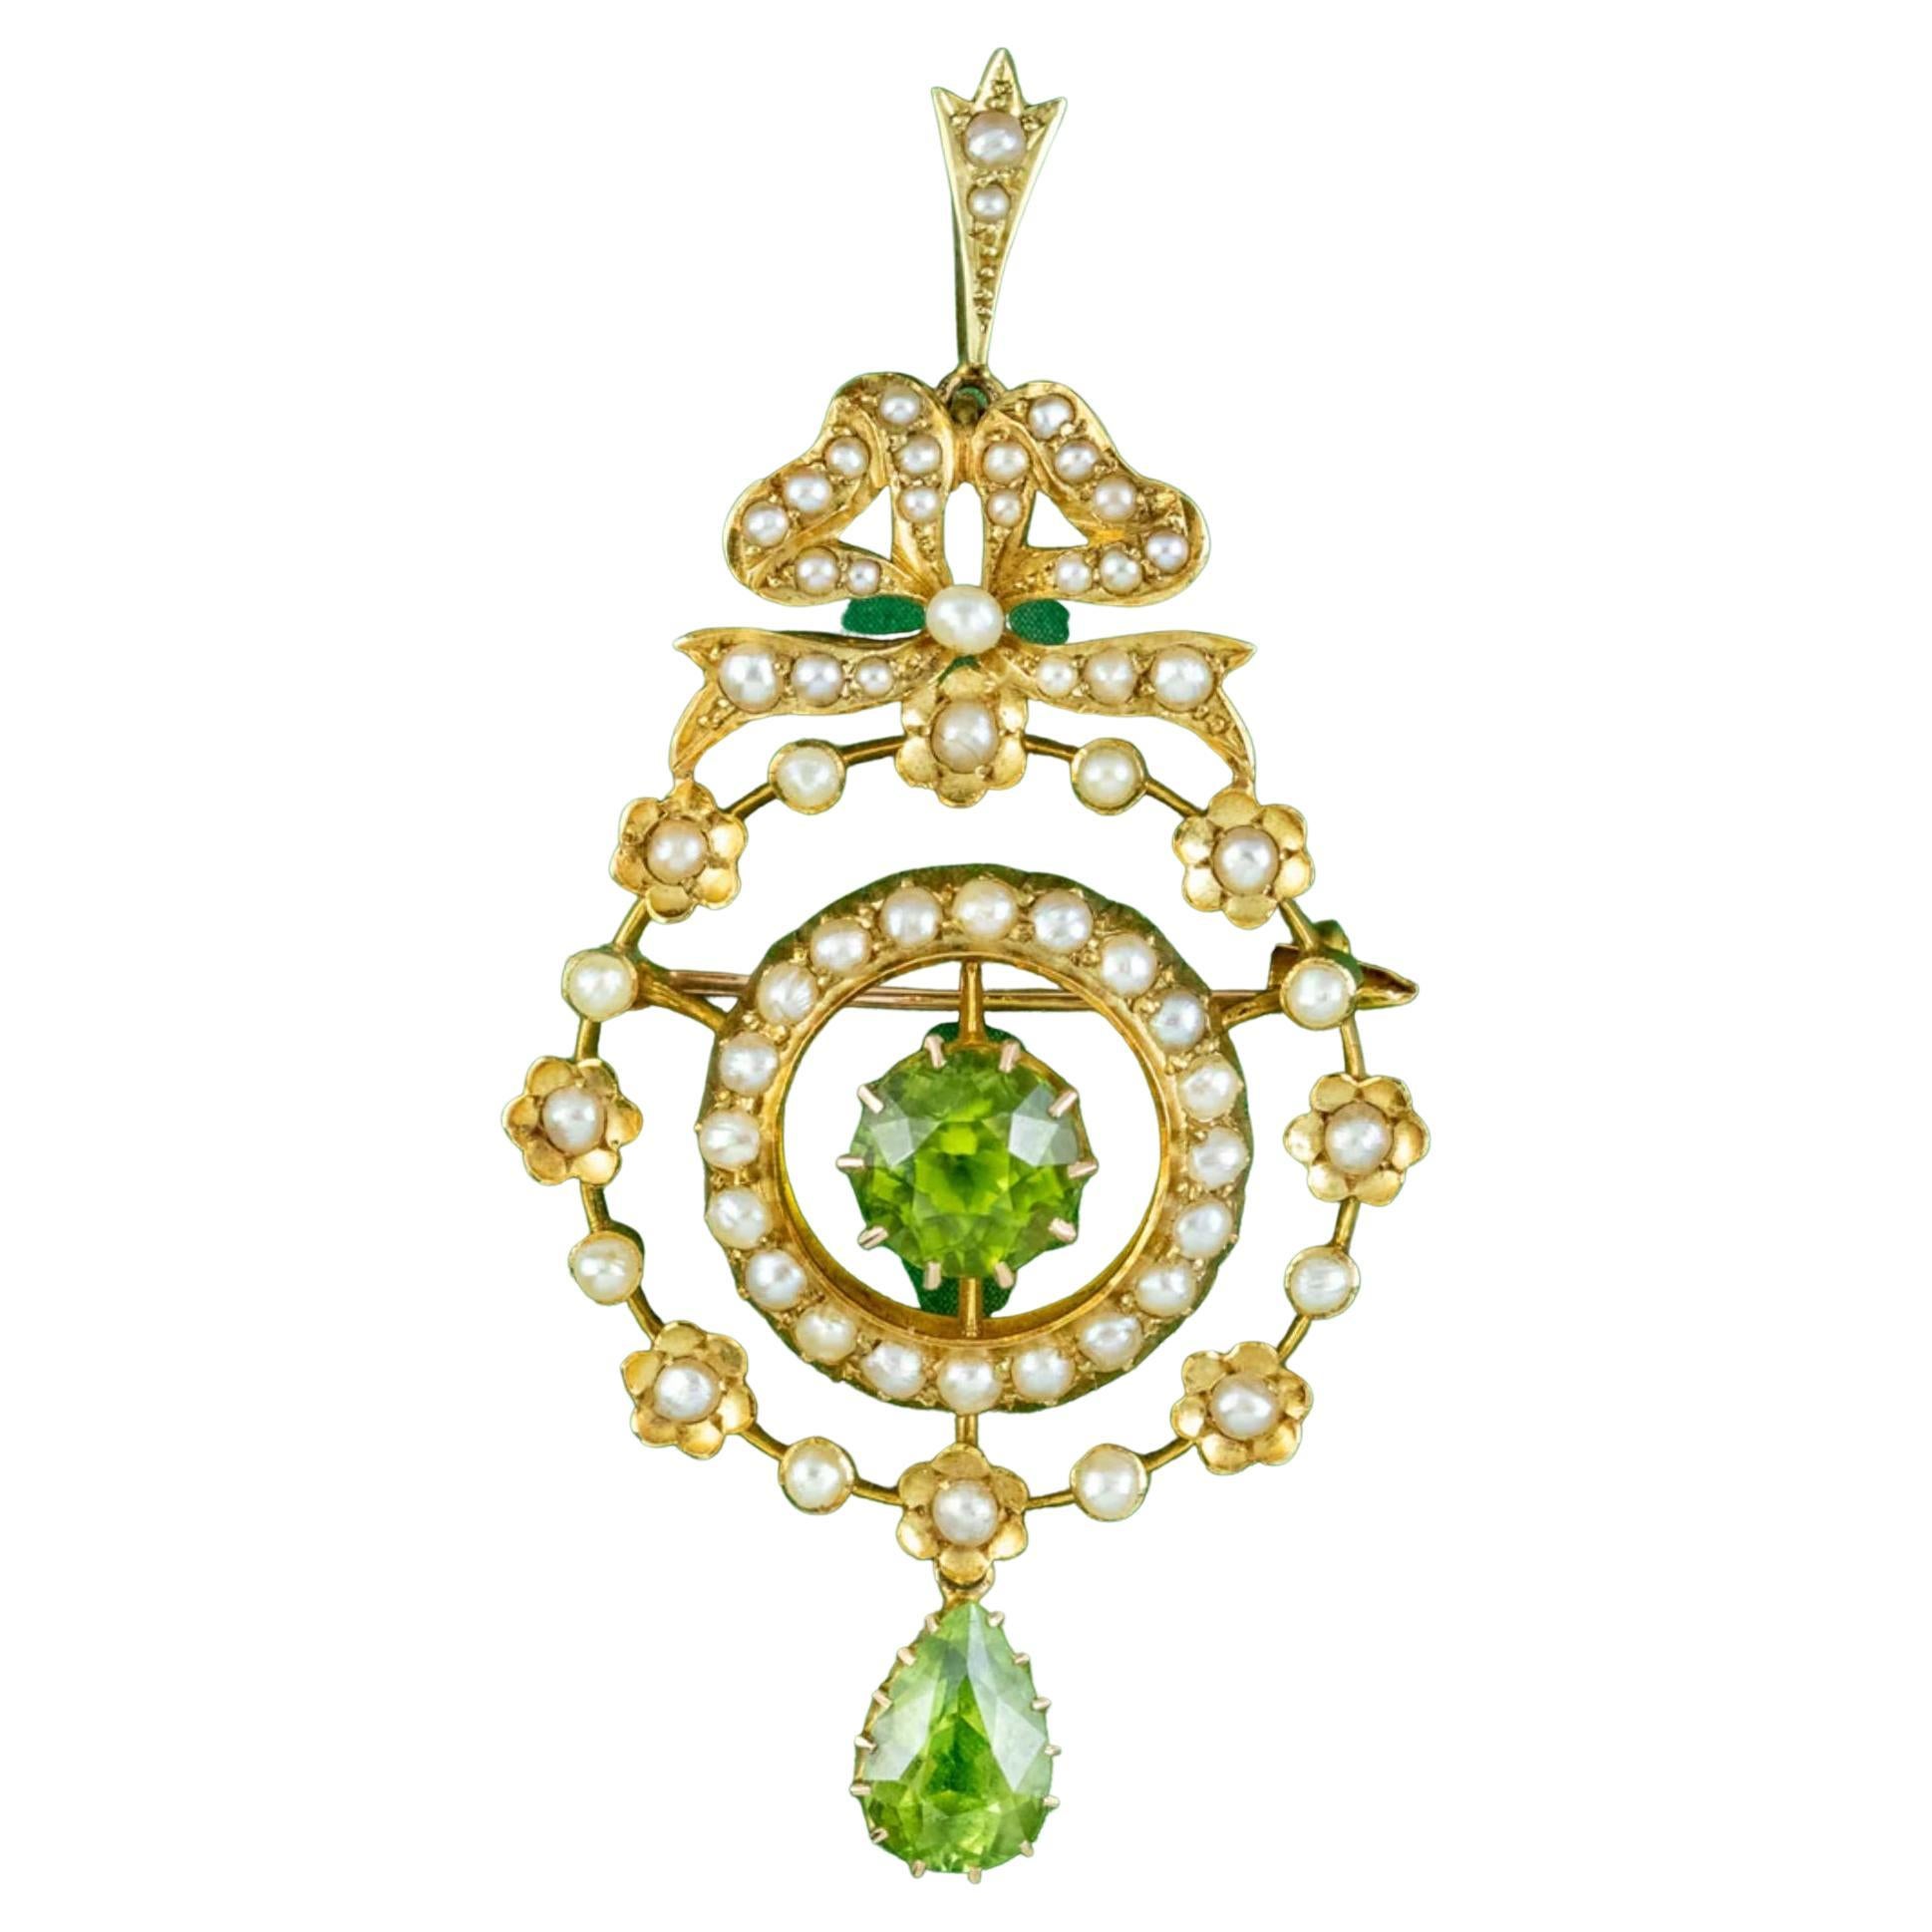 Antique Edwardian Peridot Pearl Pendant in 15ct Gold, circa 1901-1915